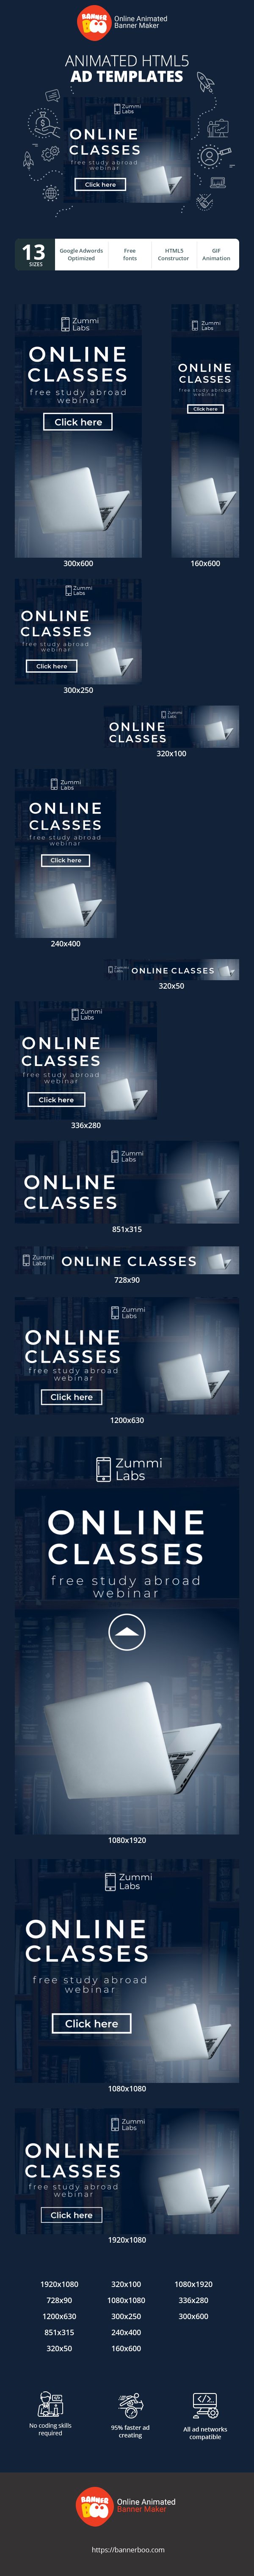 Online Classes — Free Study Abroad Webinar